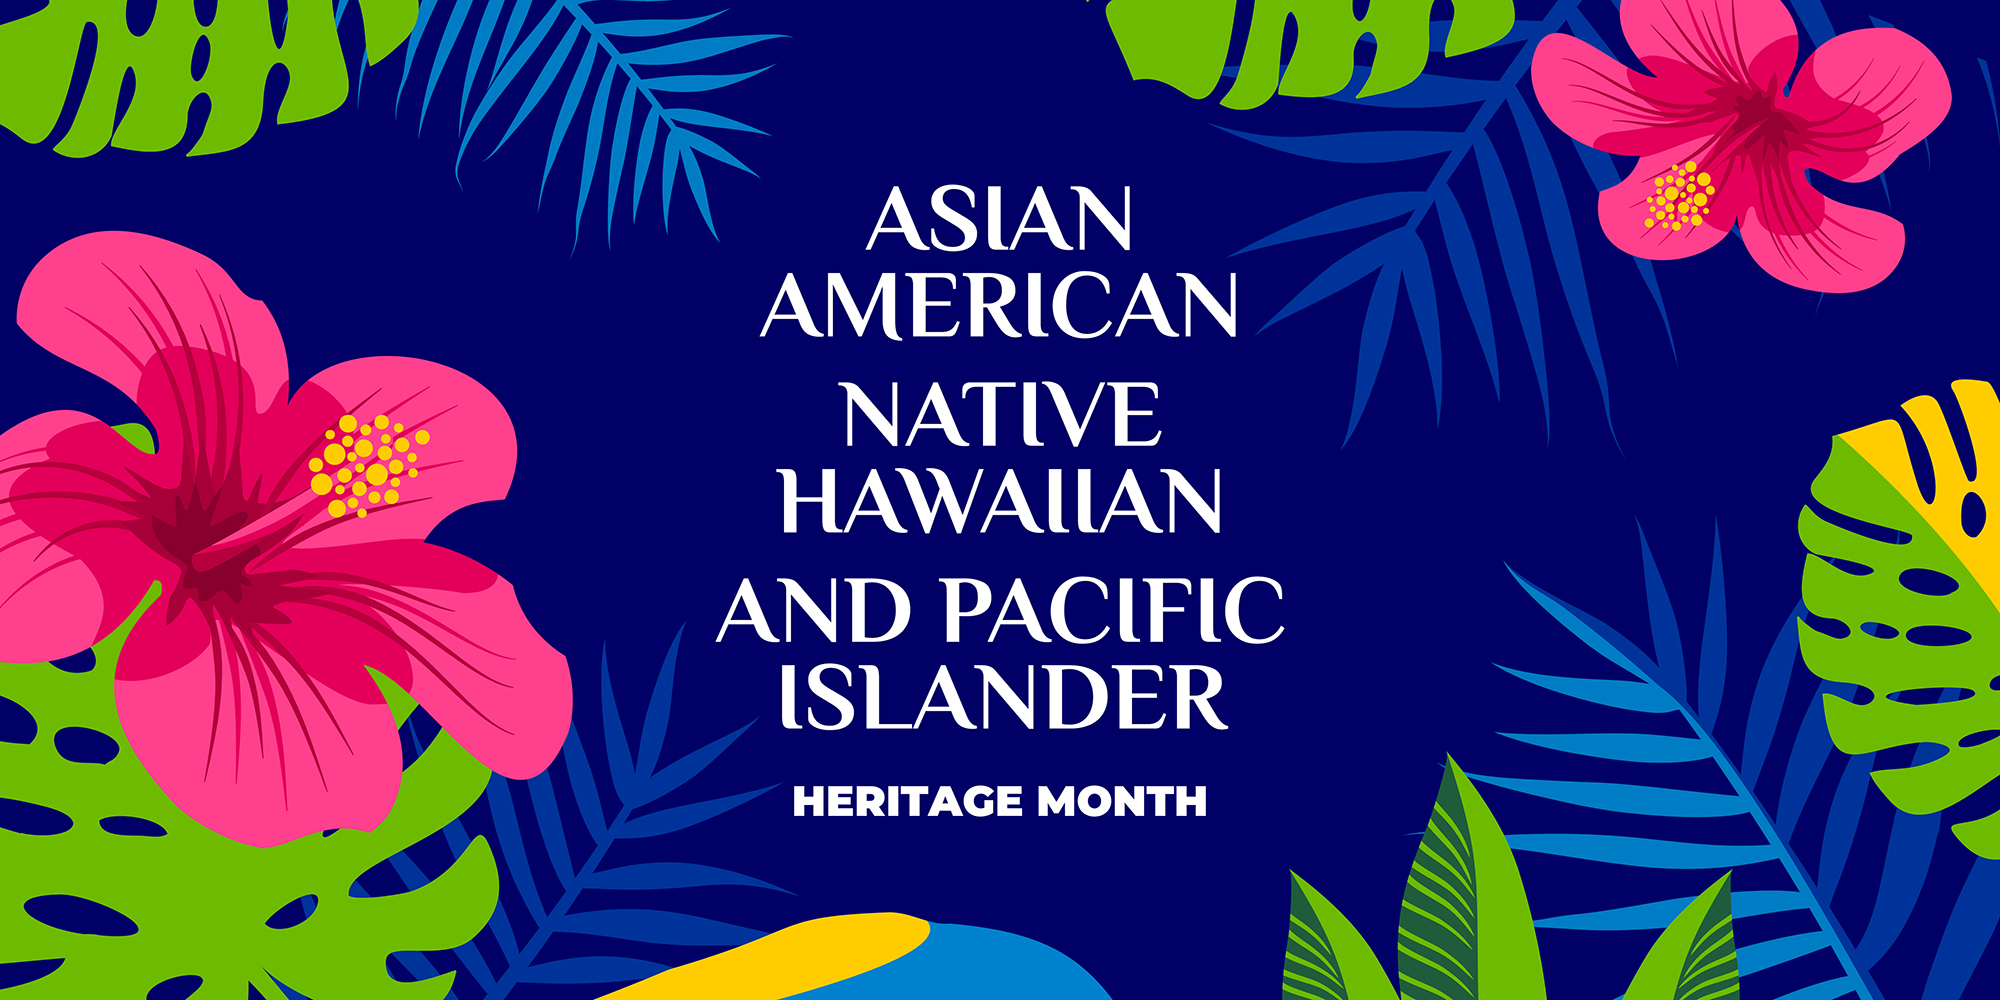 Asian American, Native Hawaiian, and Pacific Islander Heritage Month.